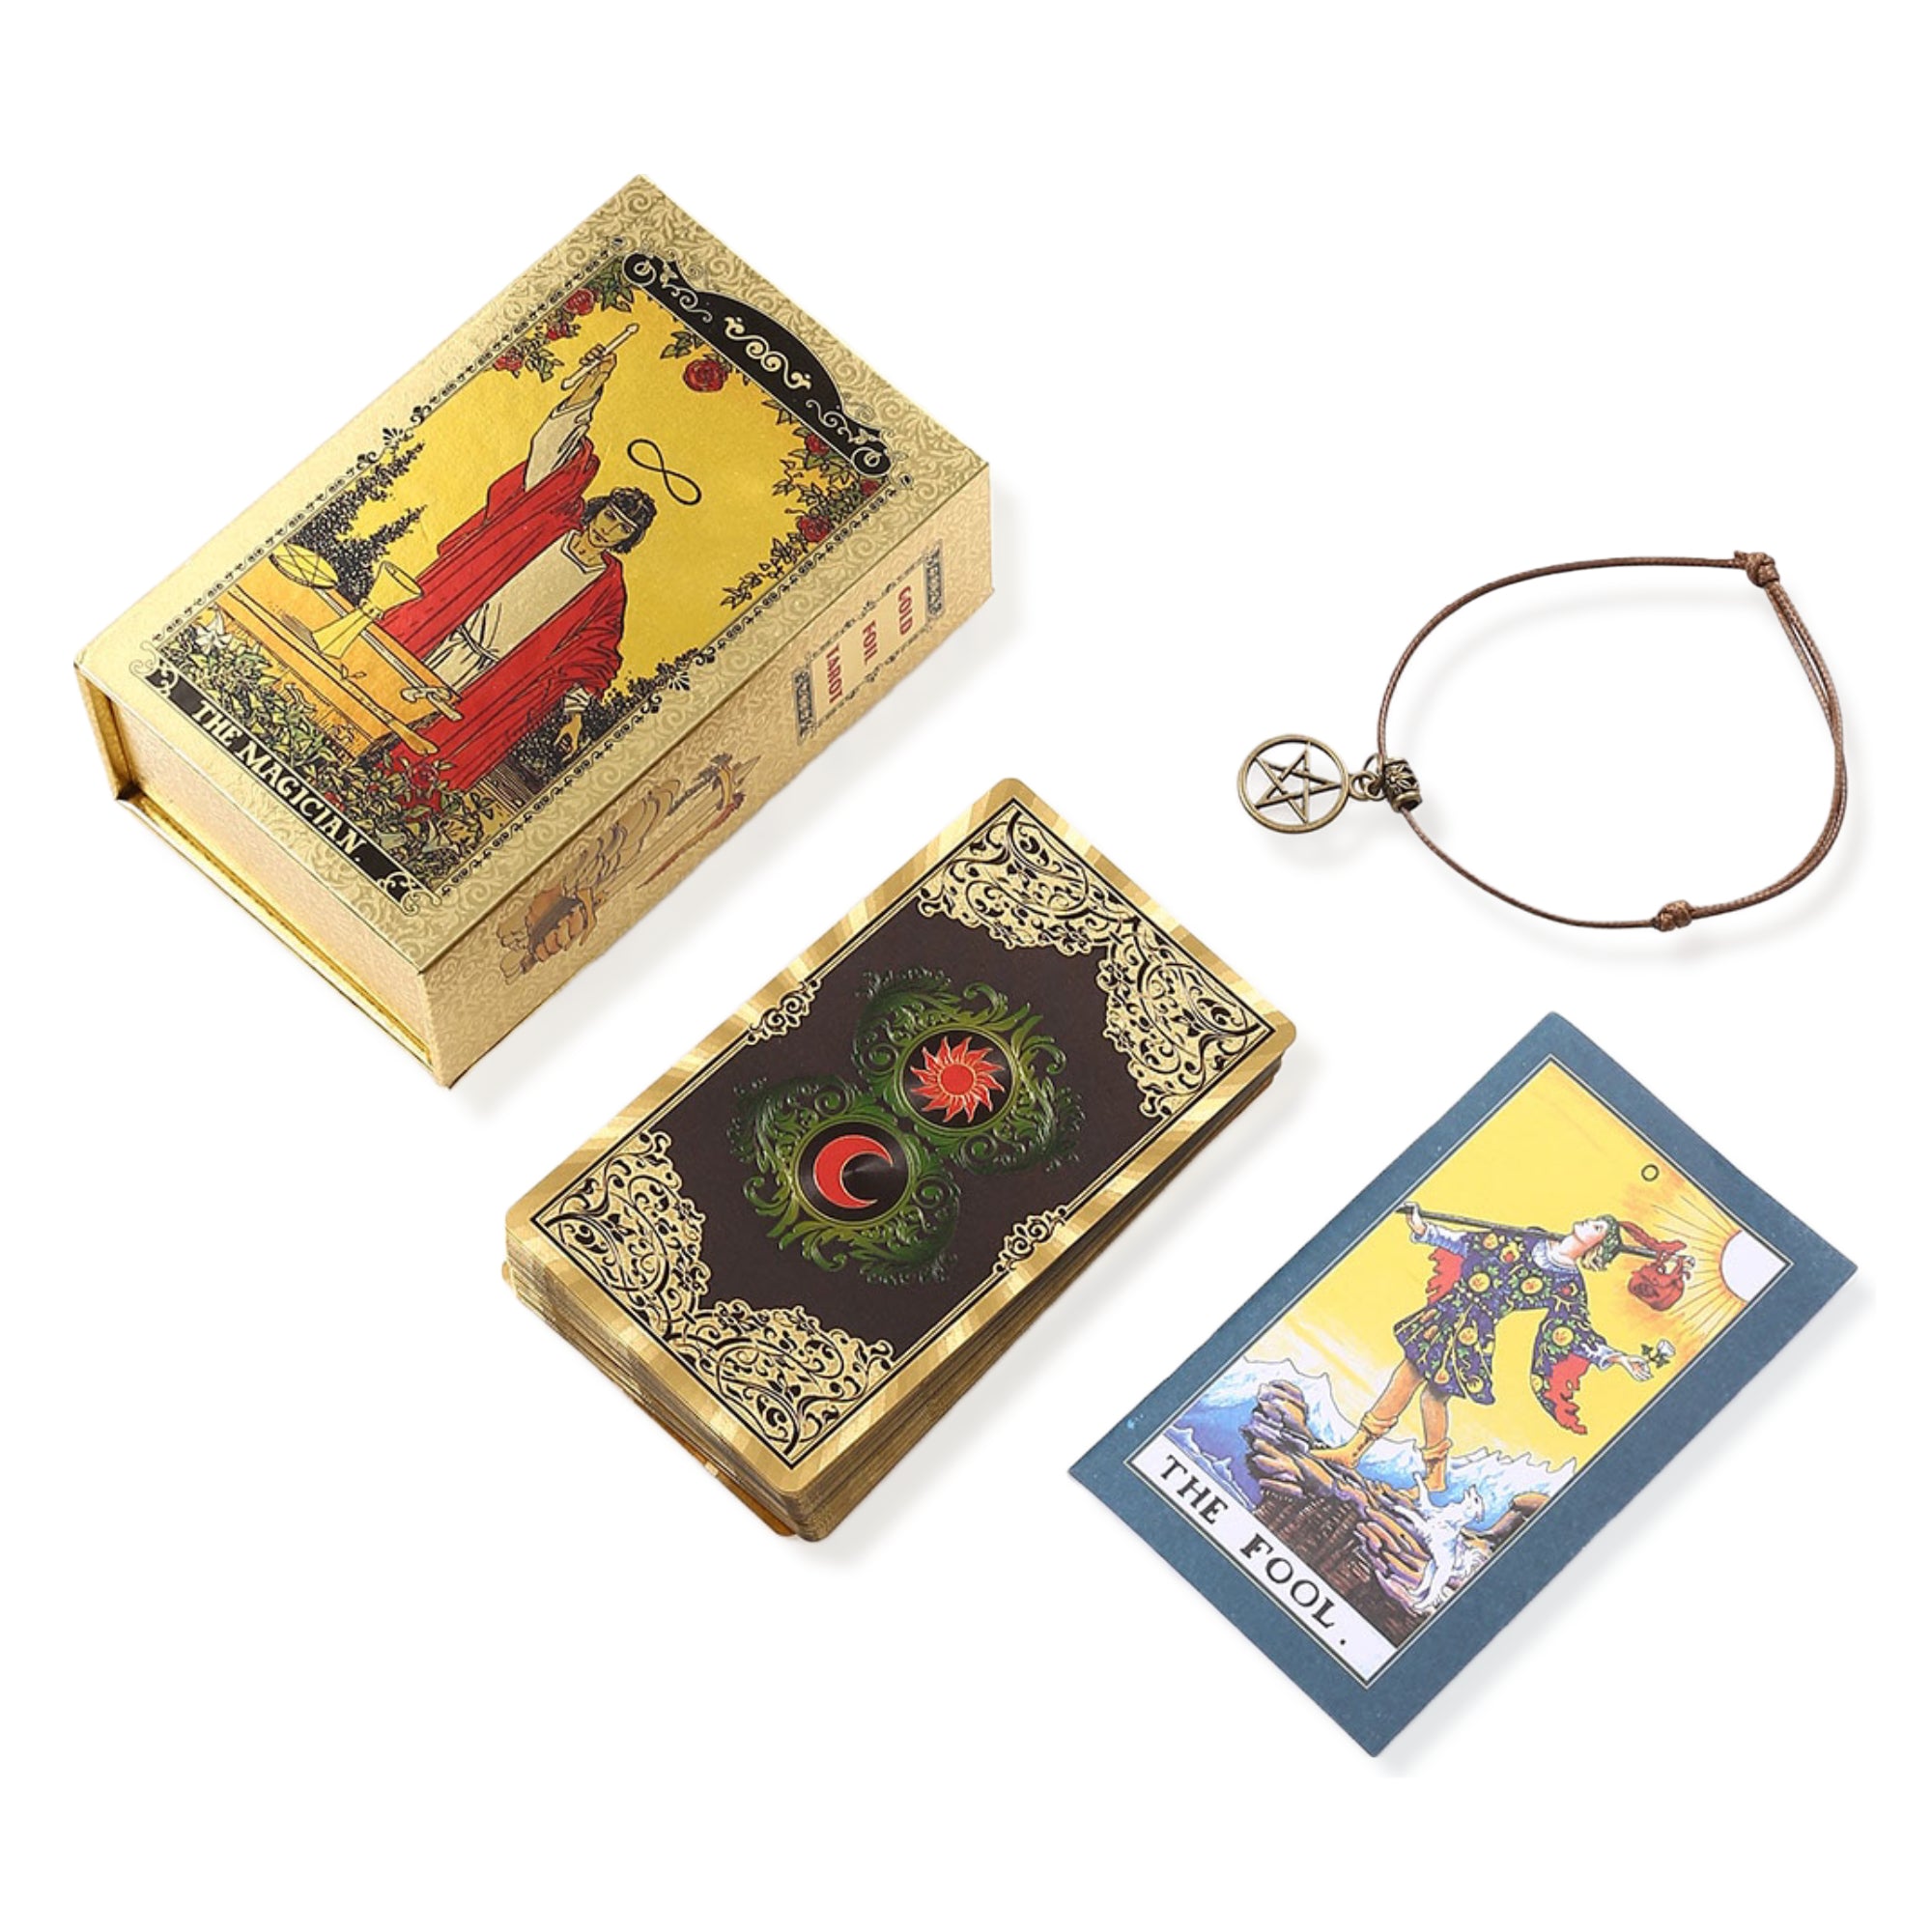 Gold Foil Tarot Deck | Waterproof, Wear-Resistant, Golden Plastic Cards + English Guidebook | RWS Inspired Divination Gift Set